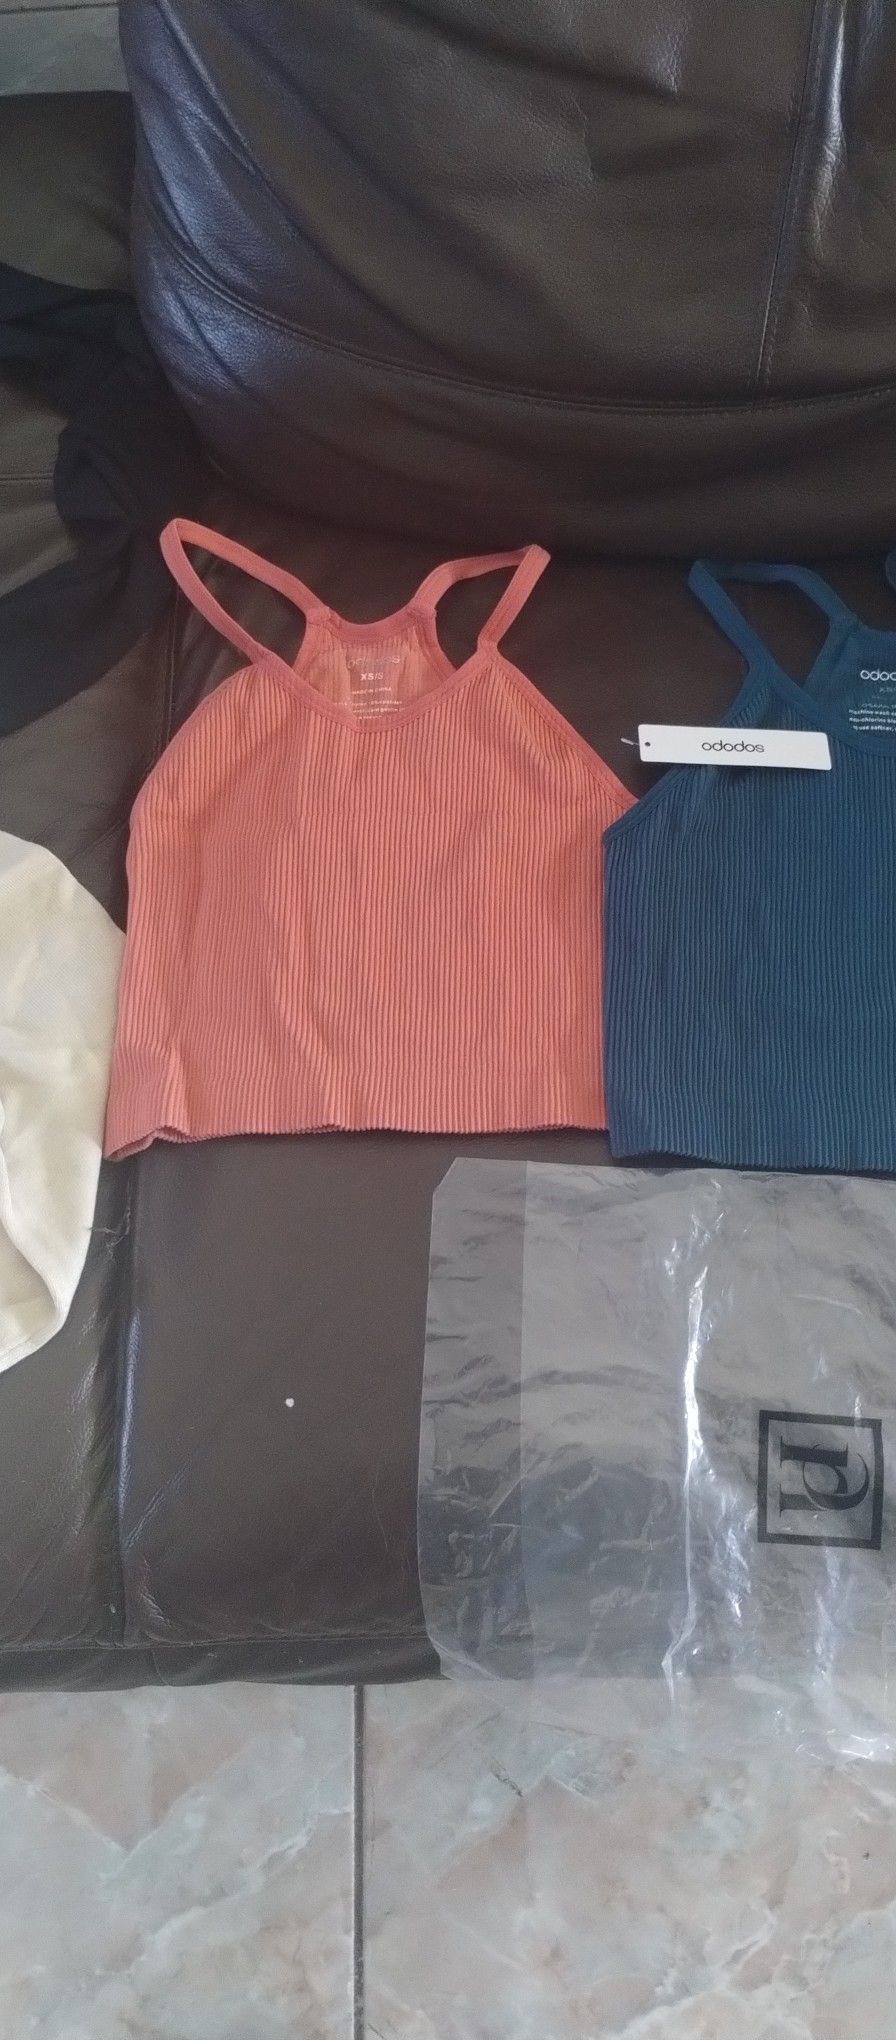 6 Woman Cardigan & Camisole Shirts NEW!